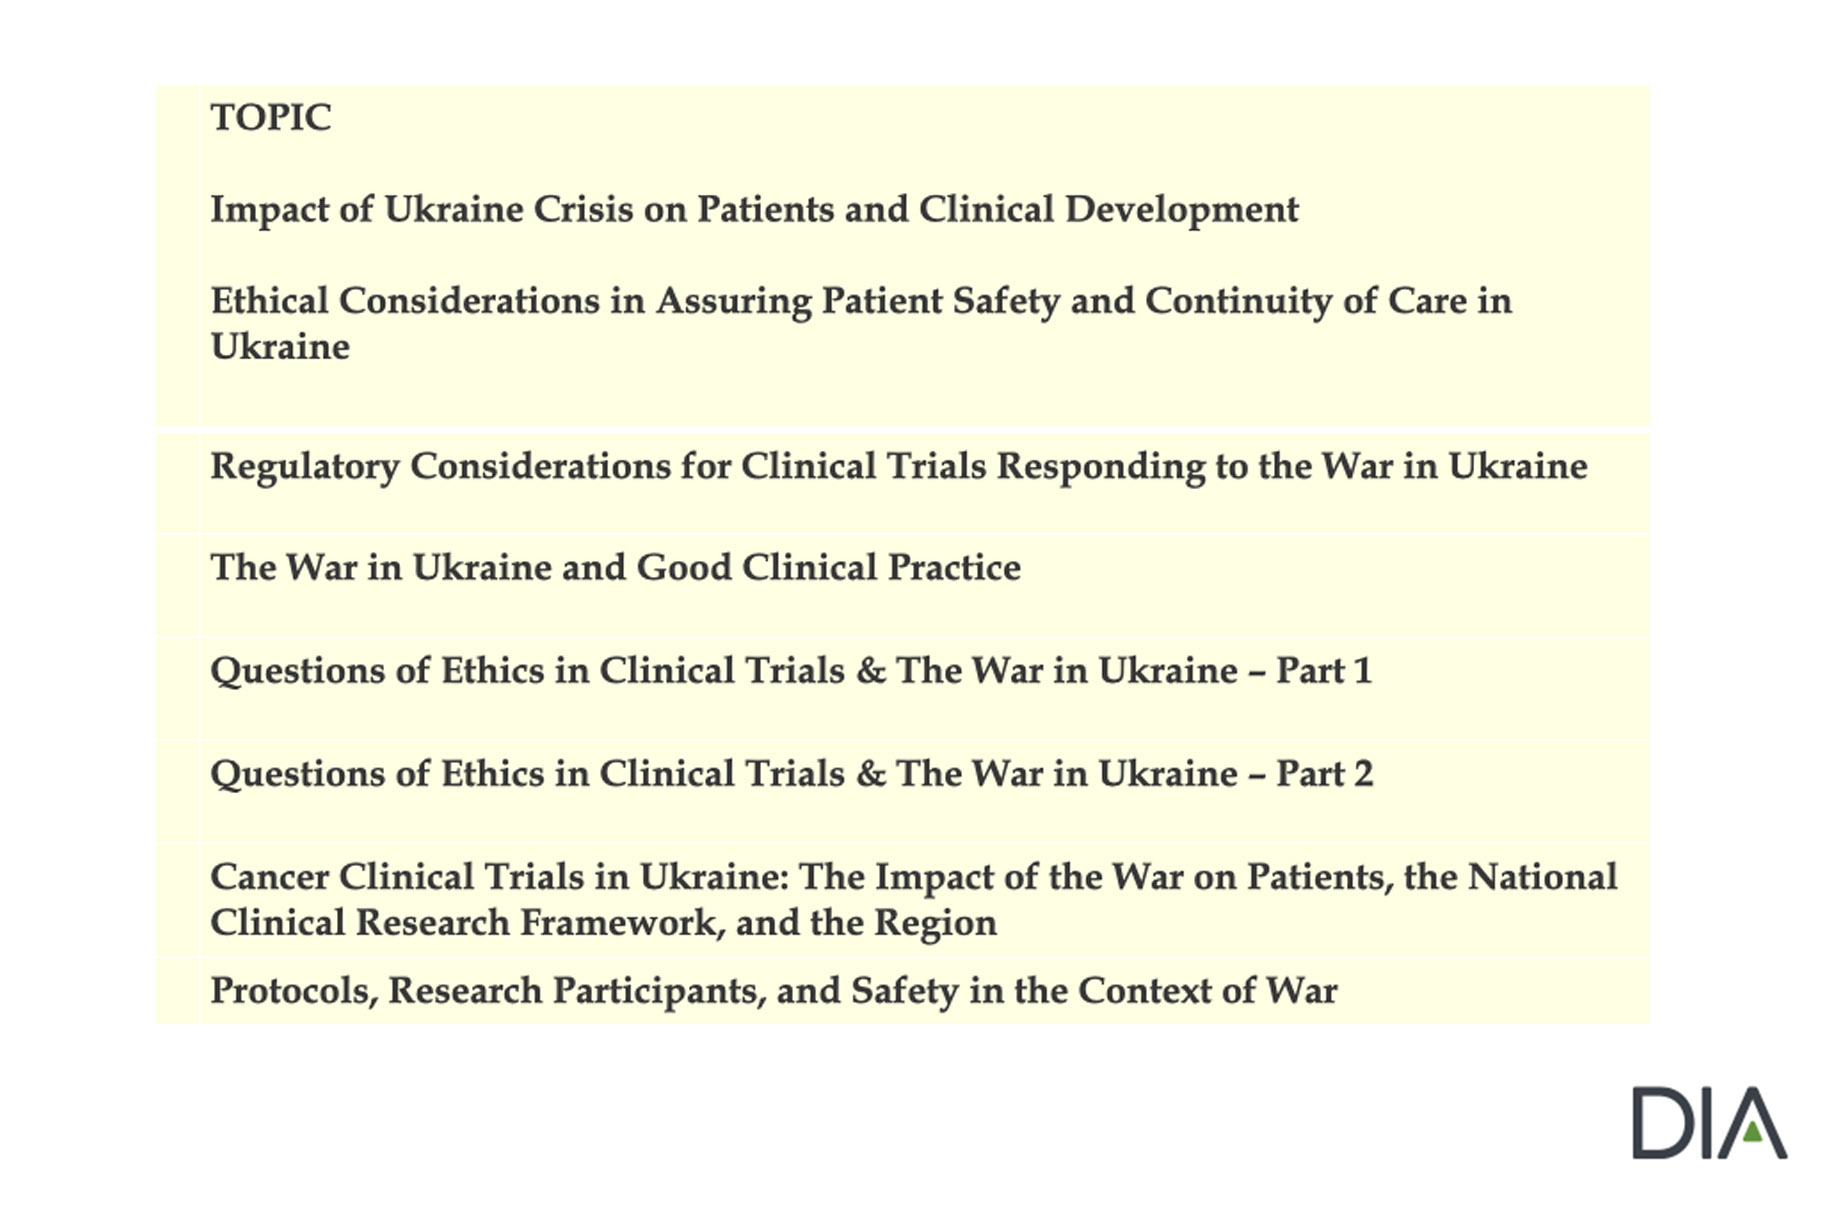 DIA/UCRSI Ukraine Webinar Series